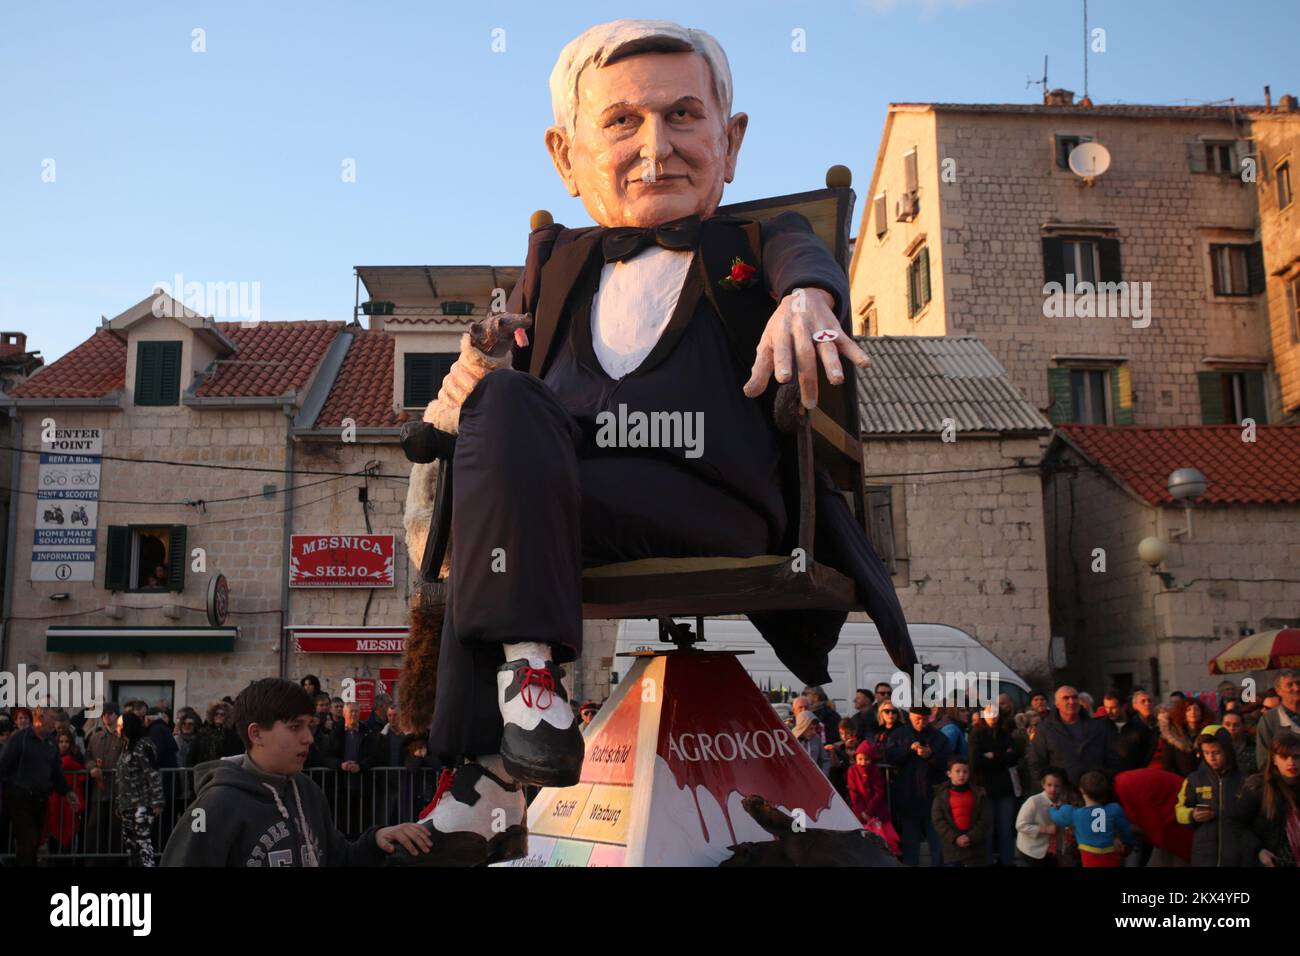 13.02.2018., Kastel Stari, Croatia - On the last day of a carnival, a ...